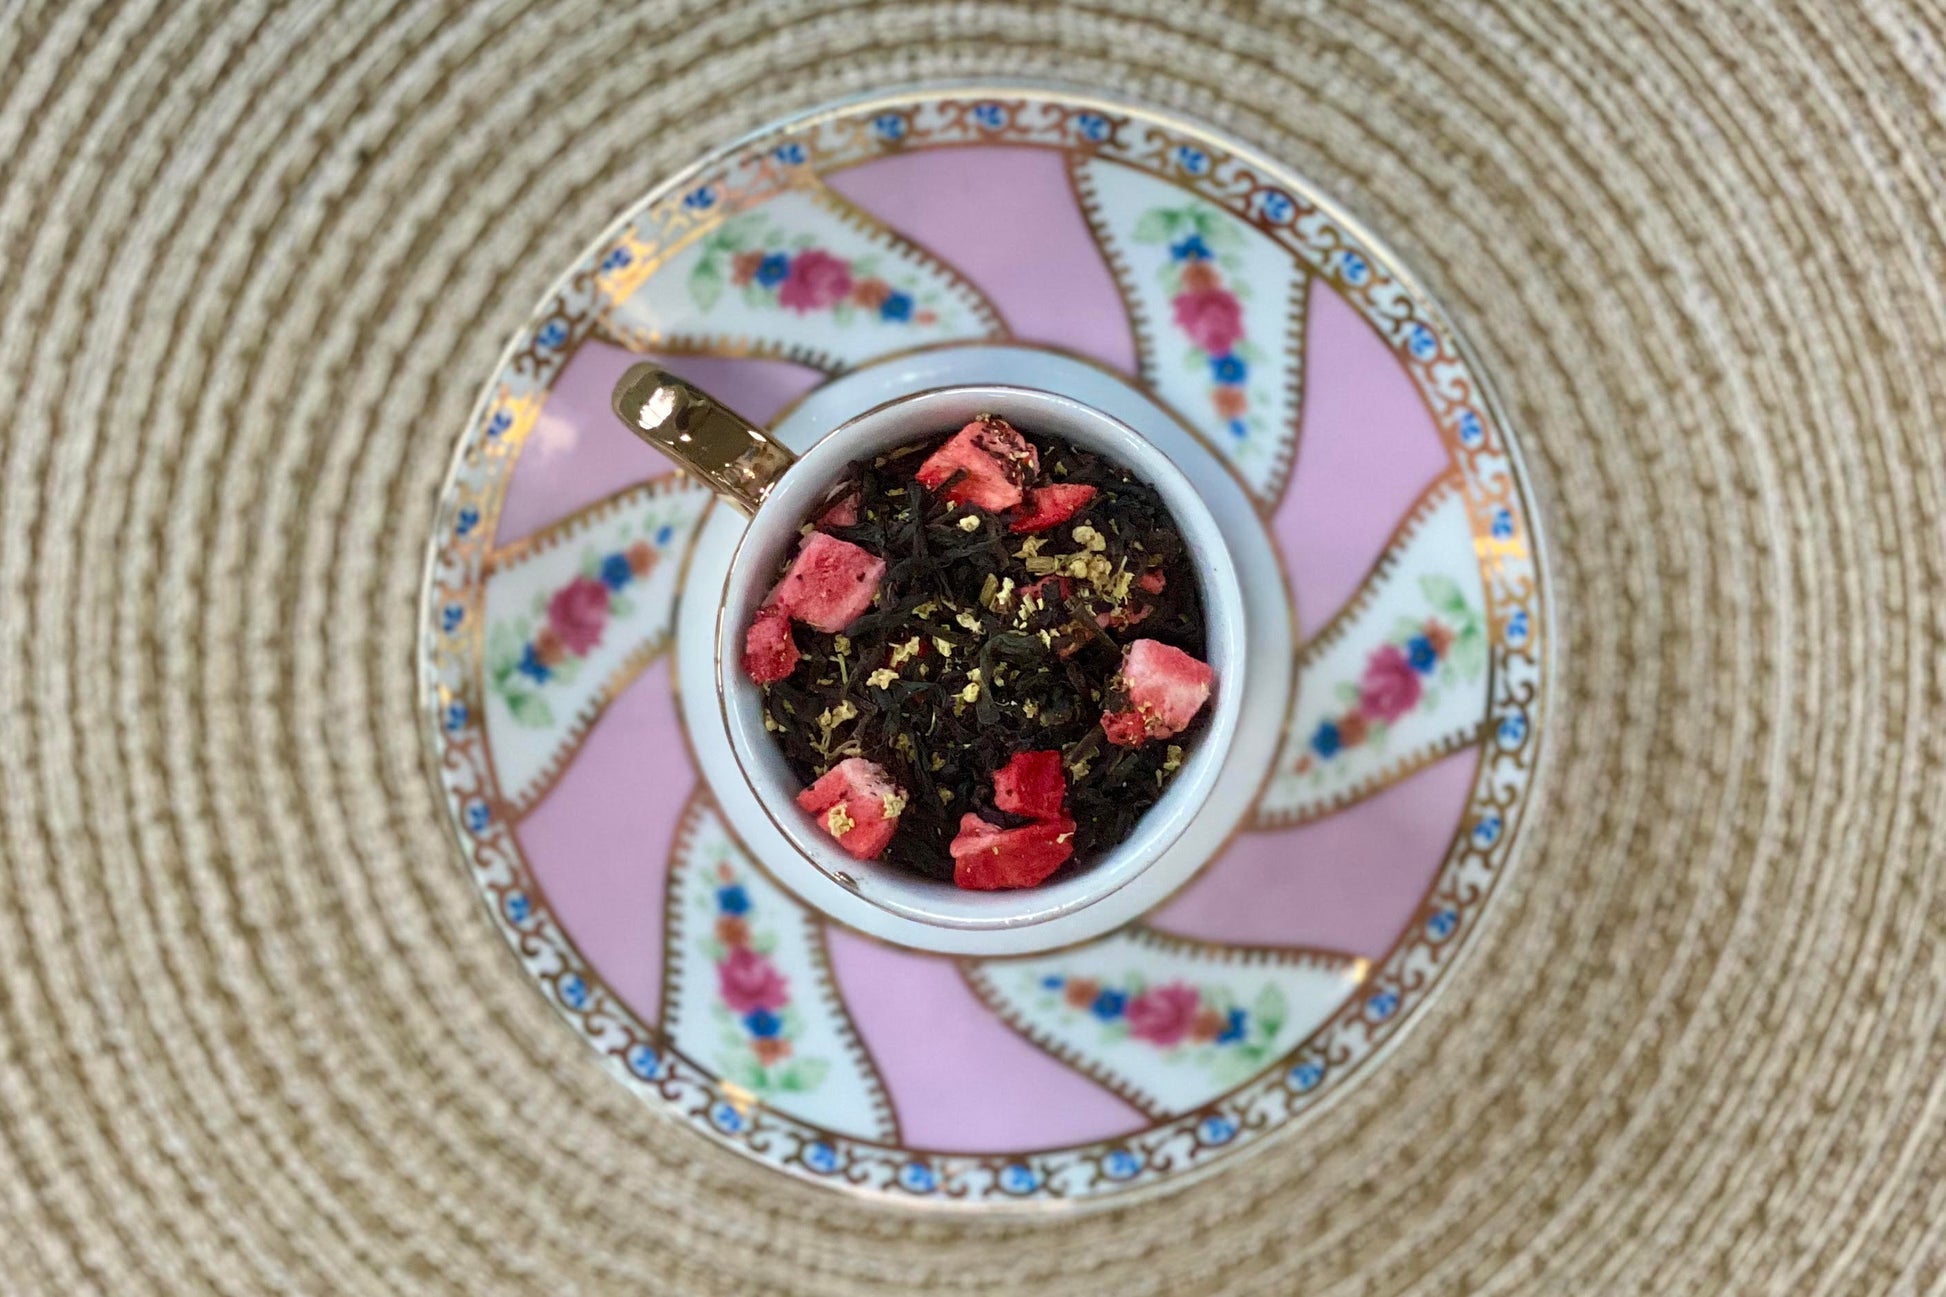 teacup full of black tea with strawberries